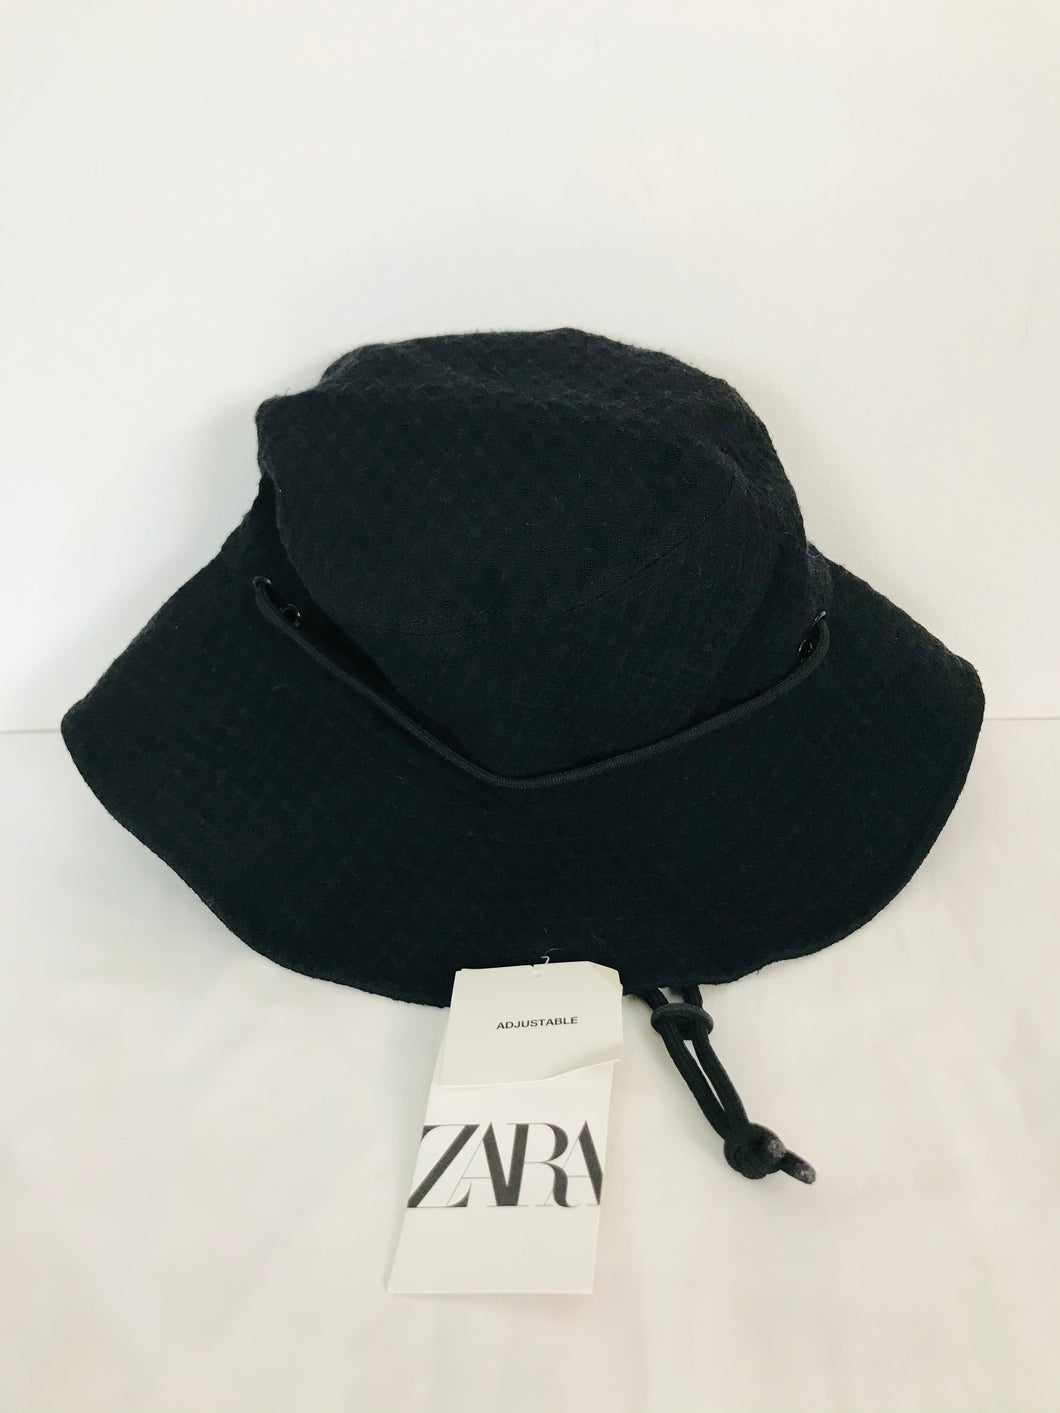 Zara Women’s Adjustable Bucket Hat NWT | M UK12 | Black